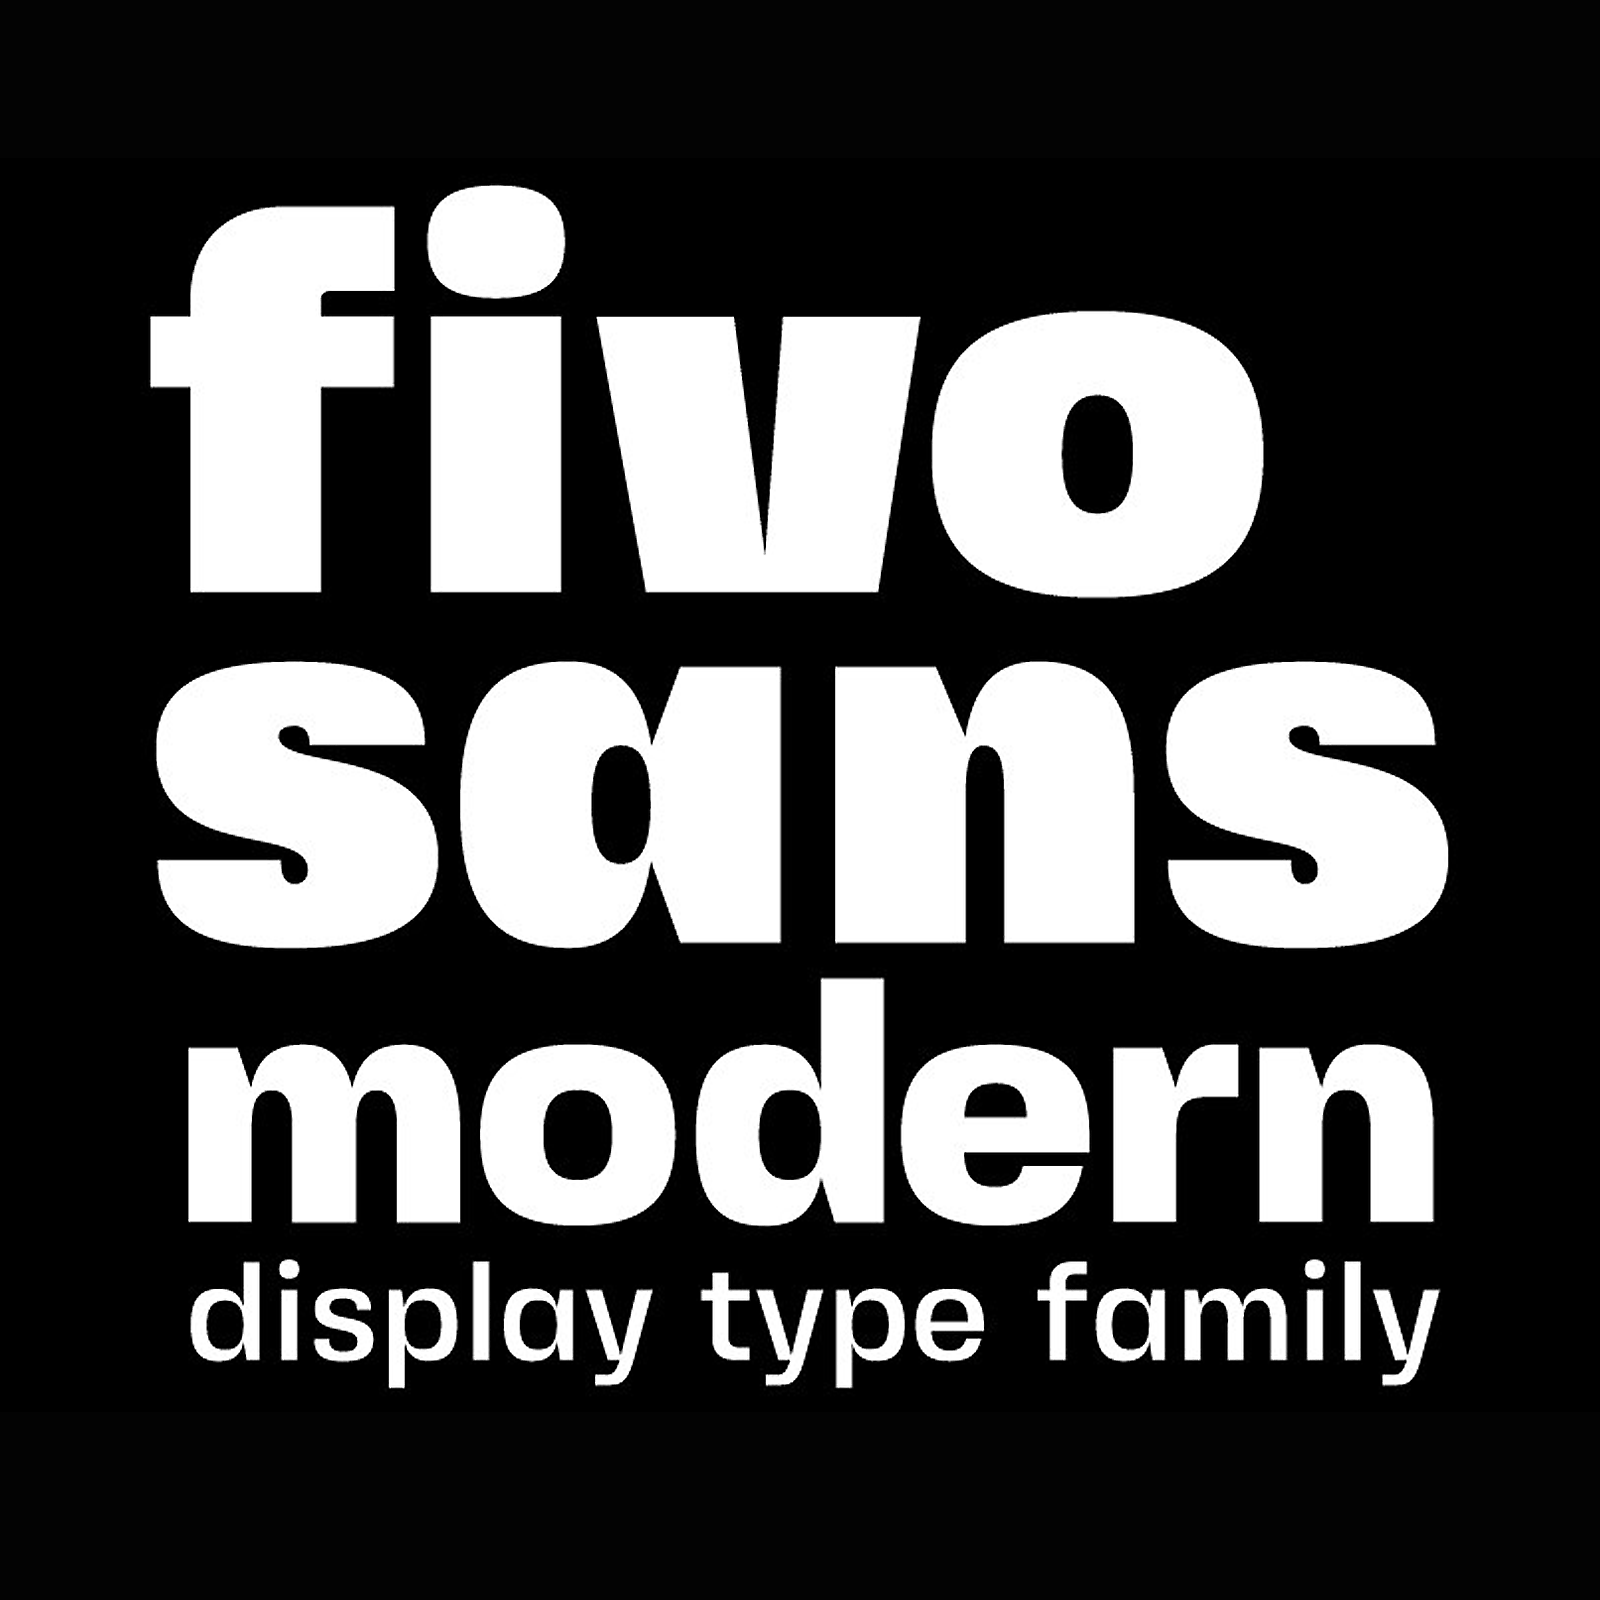 Przykład czcionki Fivo Sans Modern